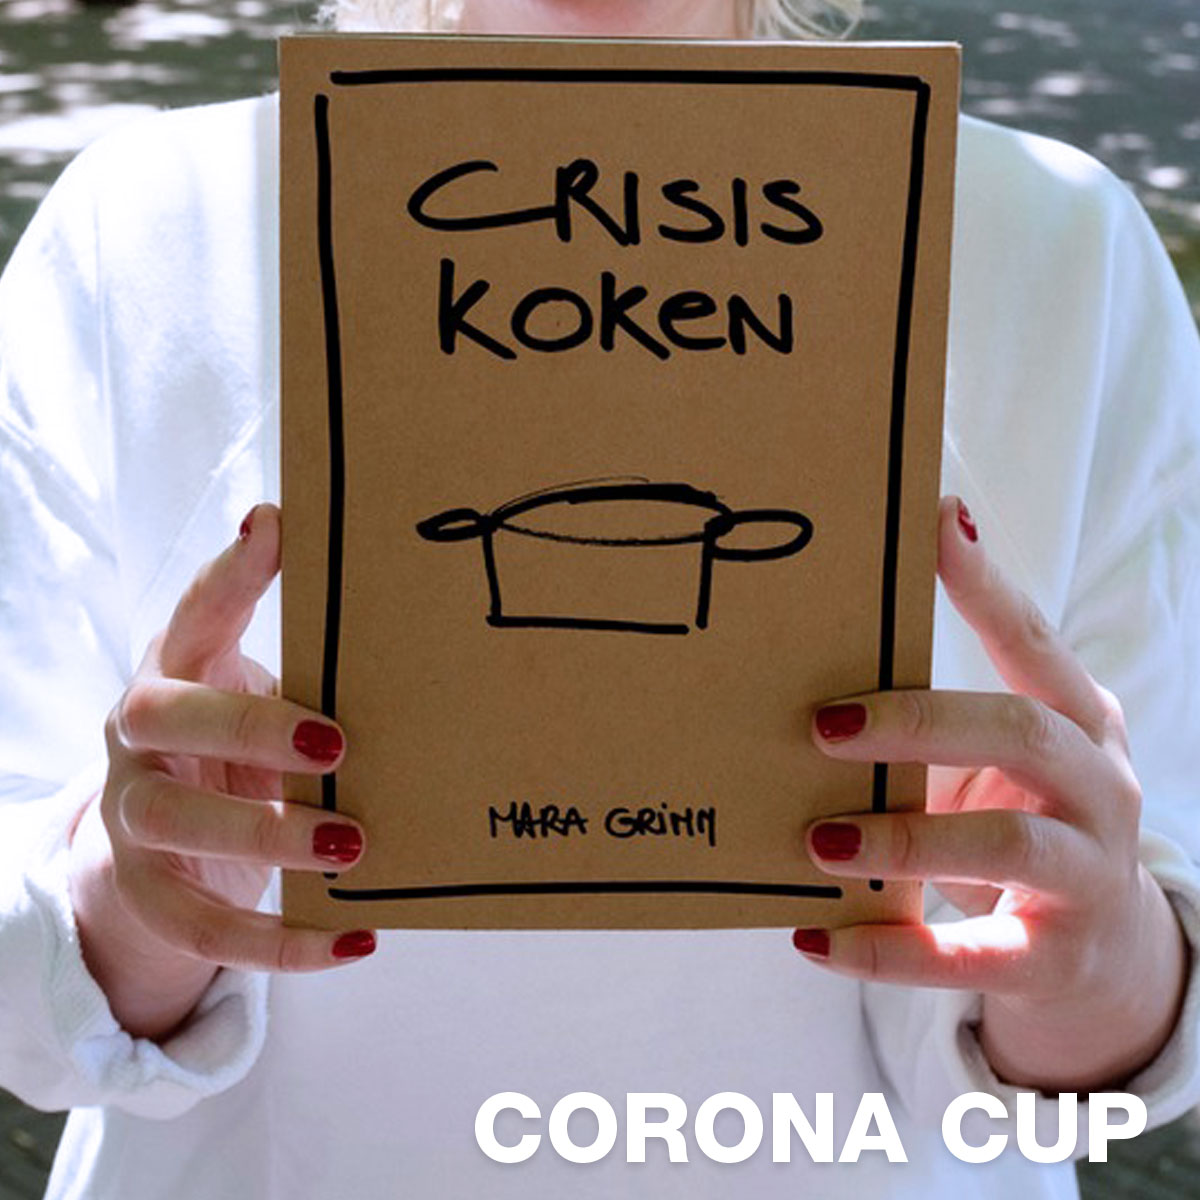 Corona Cup